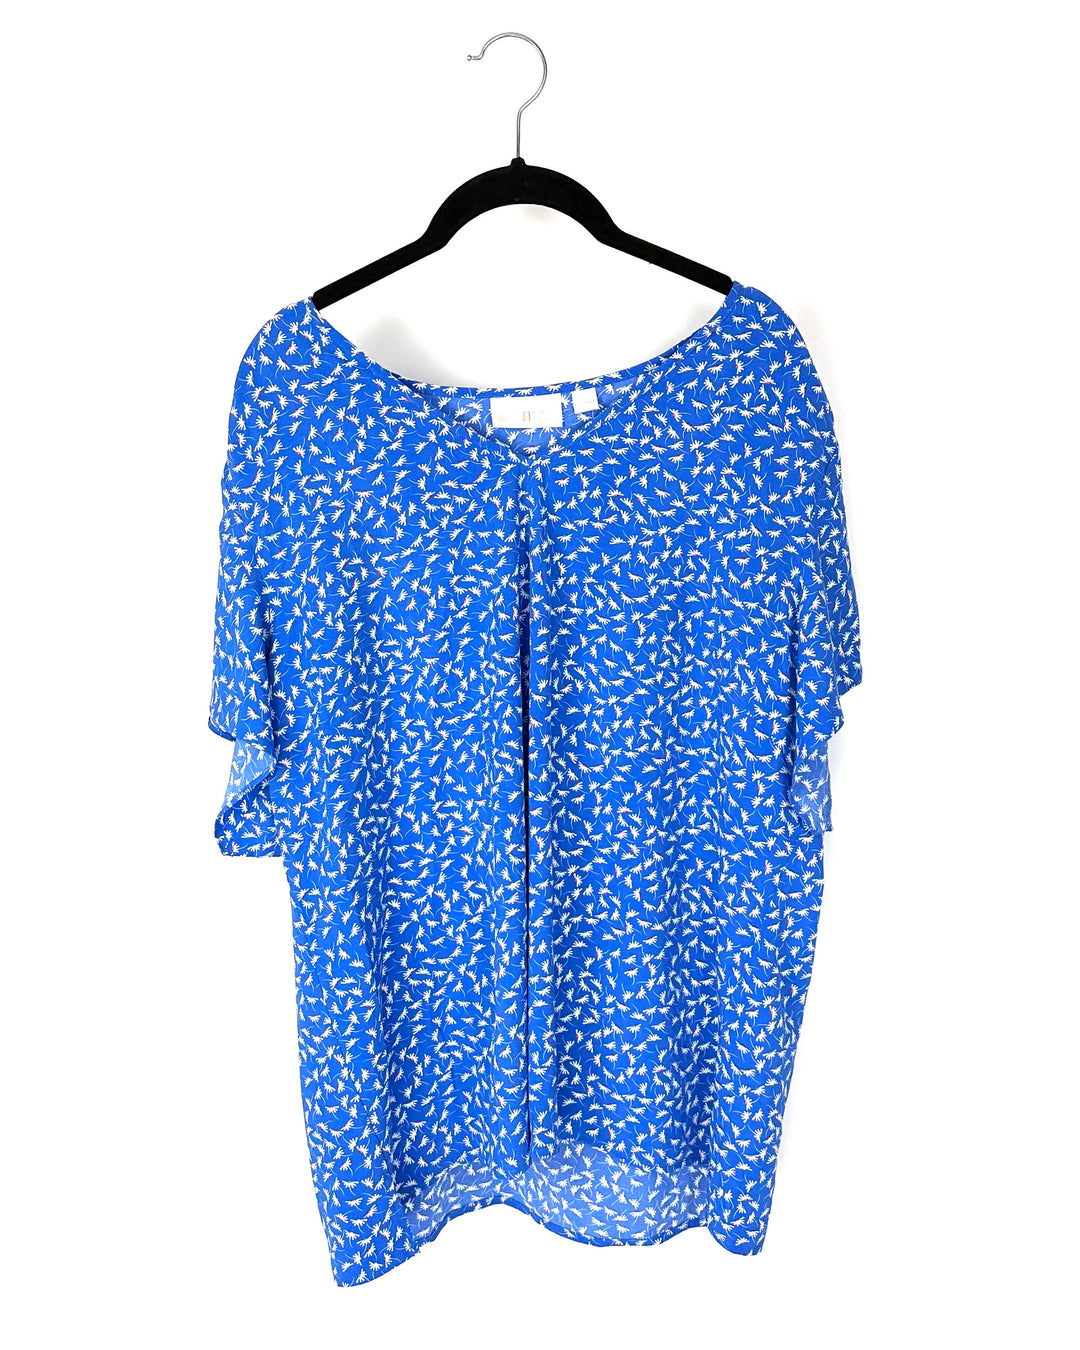 Blue Floral Short-Sleeve Blouse - Size 14-16